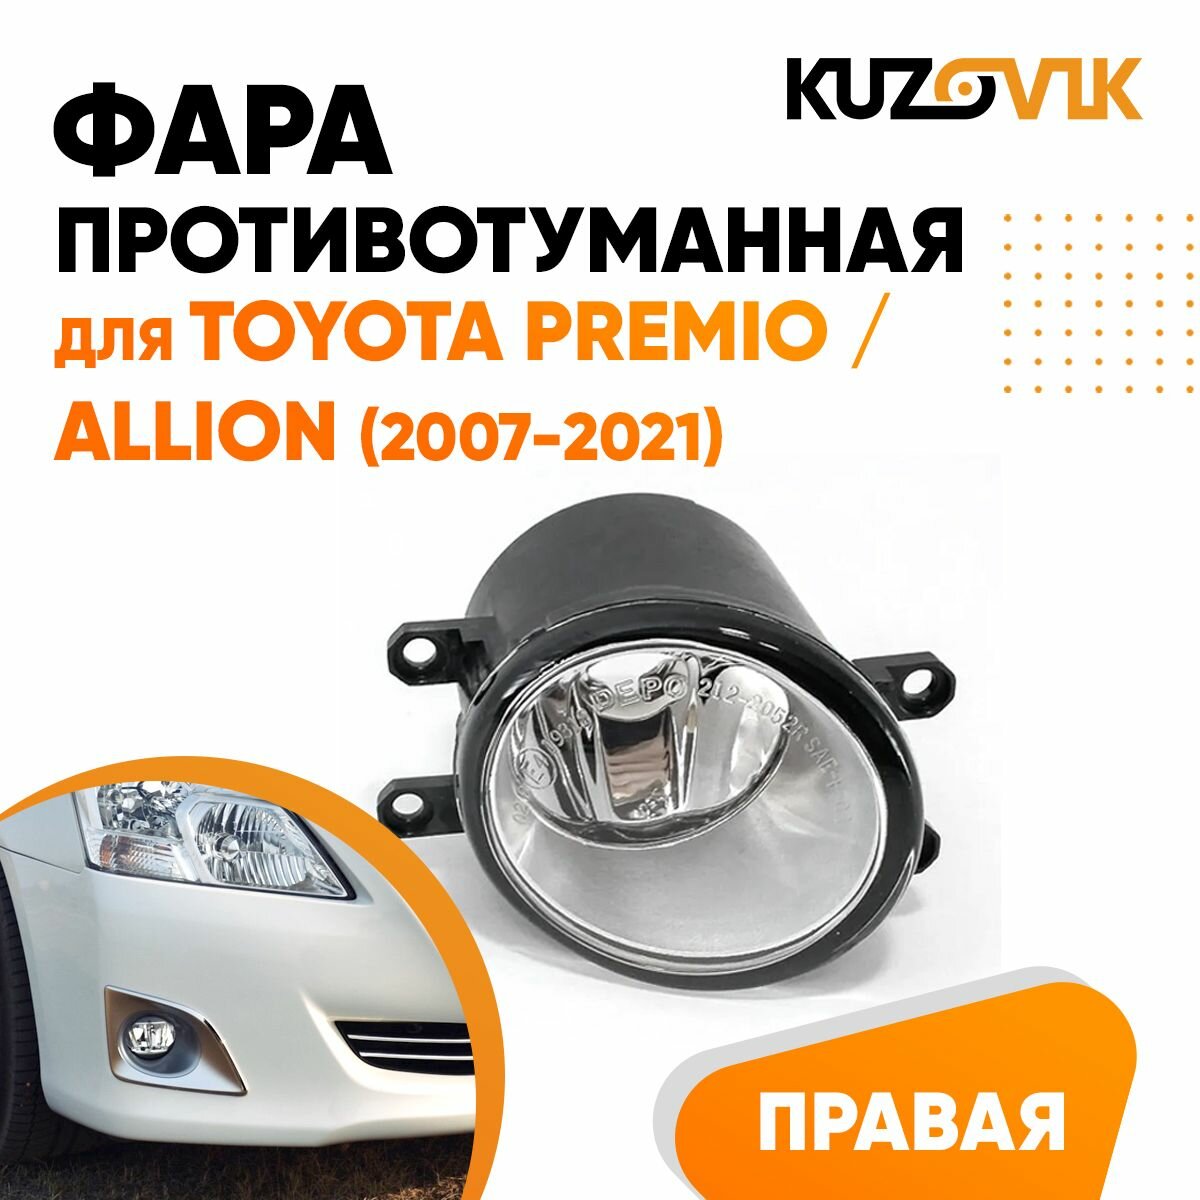 Противотуманная фара для Тойота Премио Toyota Premio / Аллион Allion (2007-2021) правая, птф, туманка